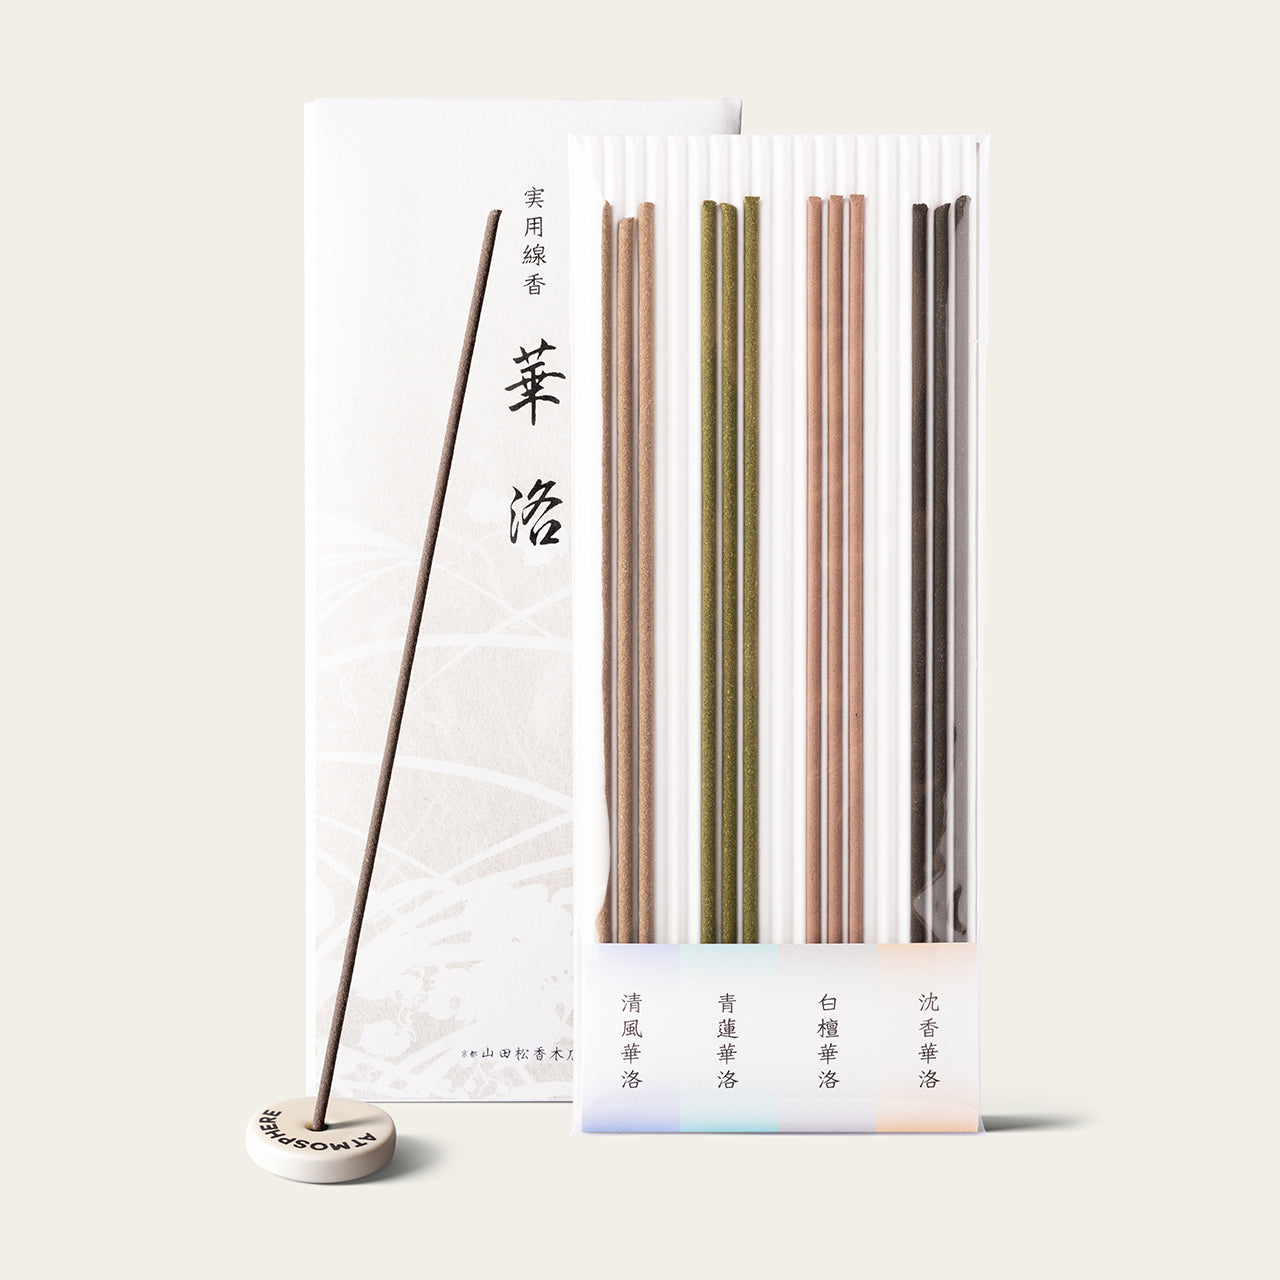 Yamadamatsu Karaku Discovery Set Japanese incense sticks (12 sticks) with Atmosphere ceramic incense holder